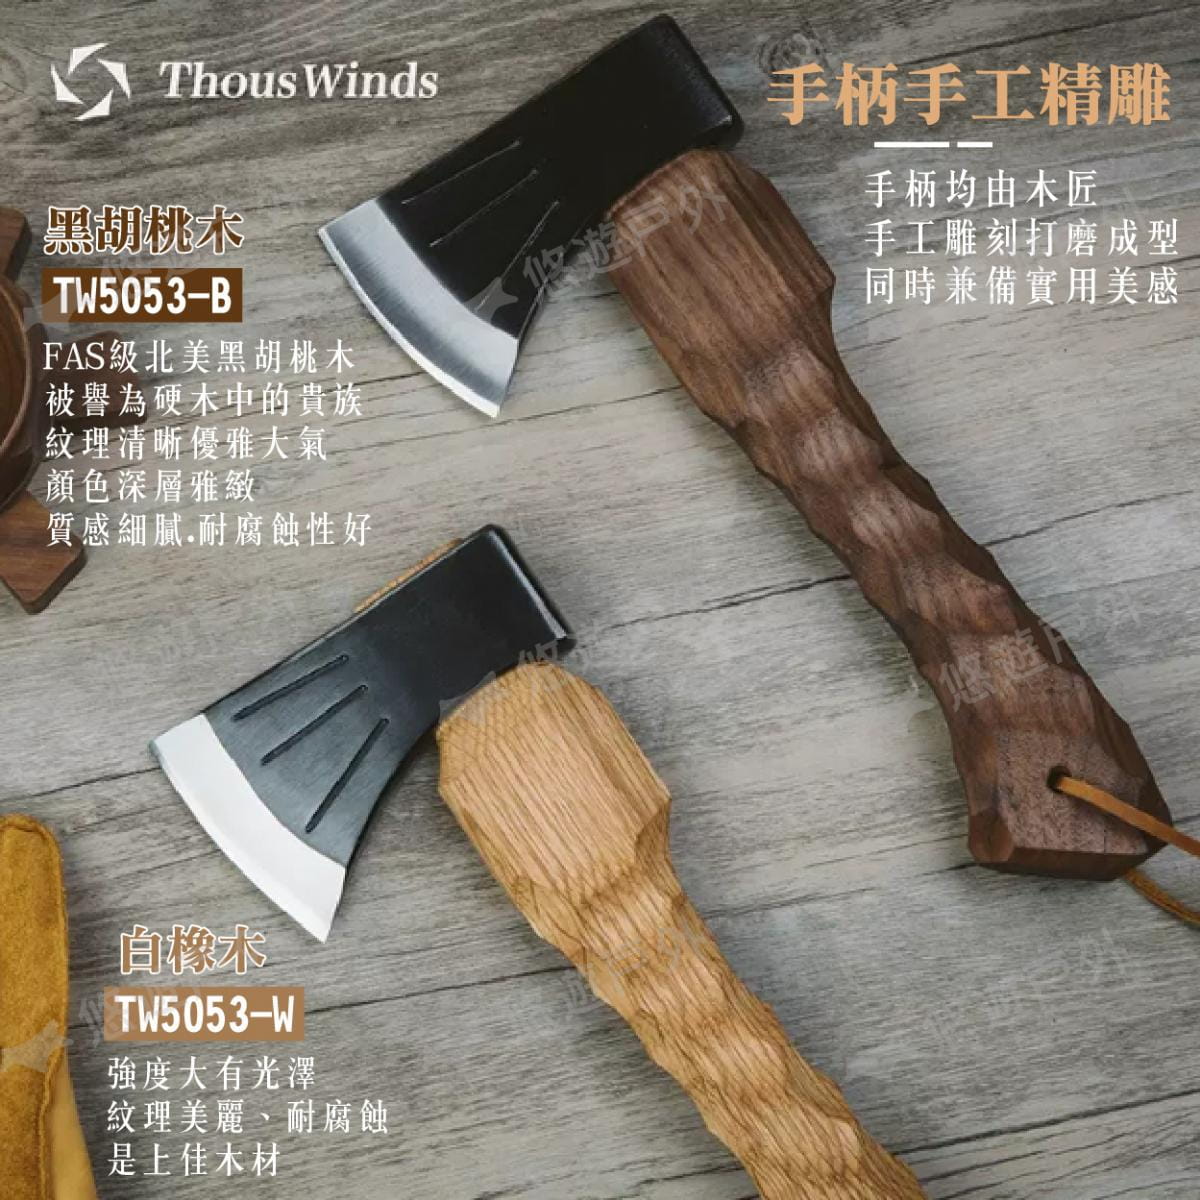 【Thous Winds】白橡木錳鋼斧 TW5053-W (悠遊戶外) 4